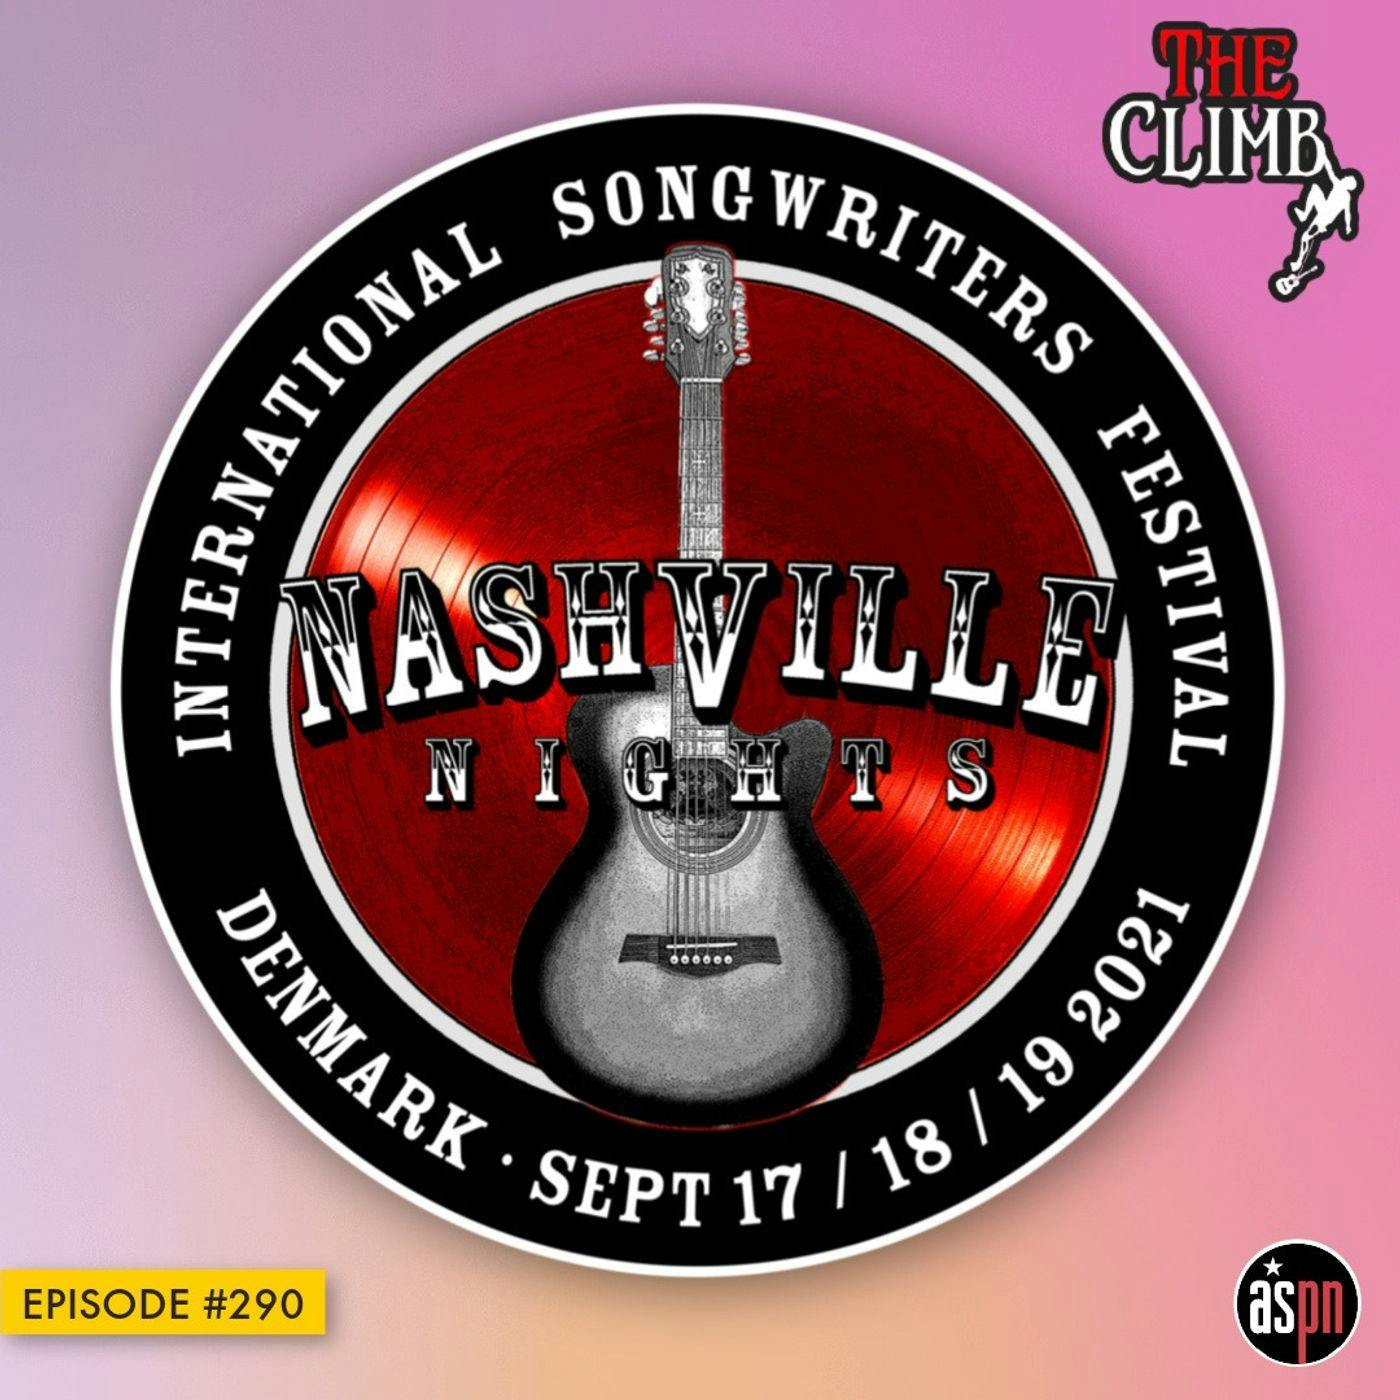 Episode #290: Nashville Nights International Songwriting Festival